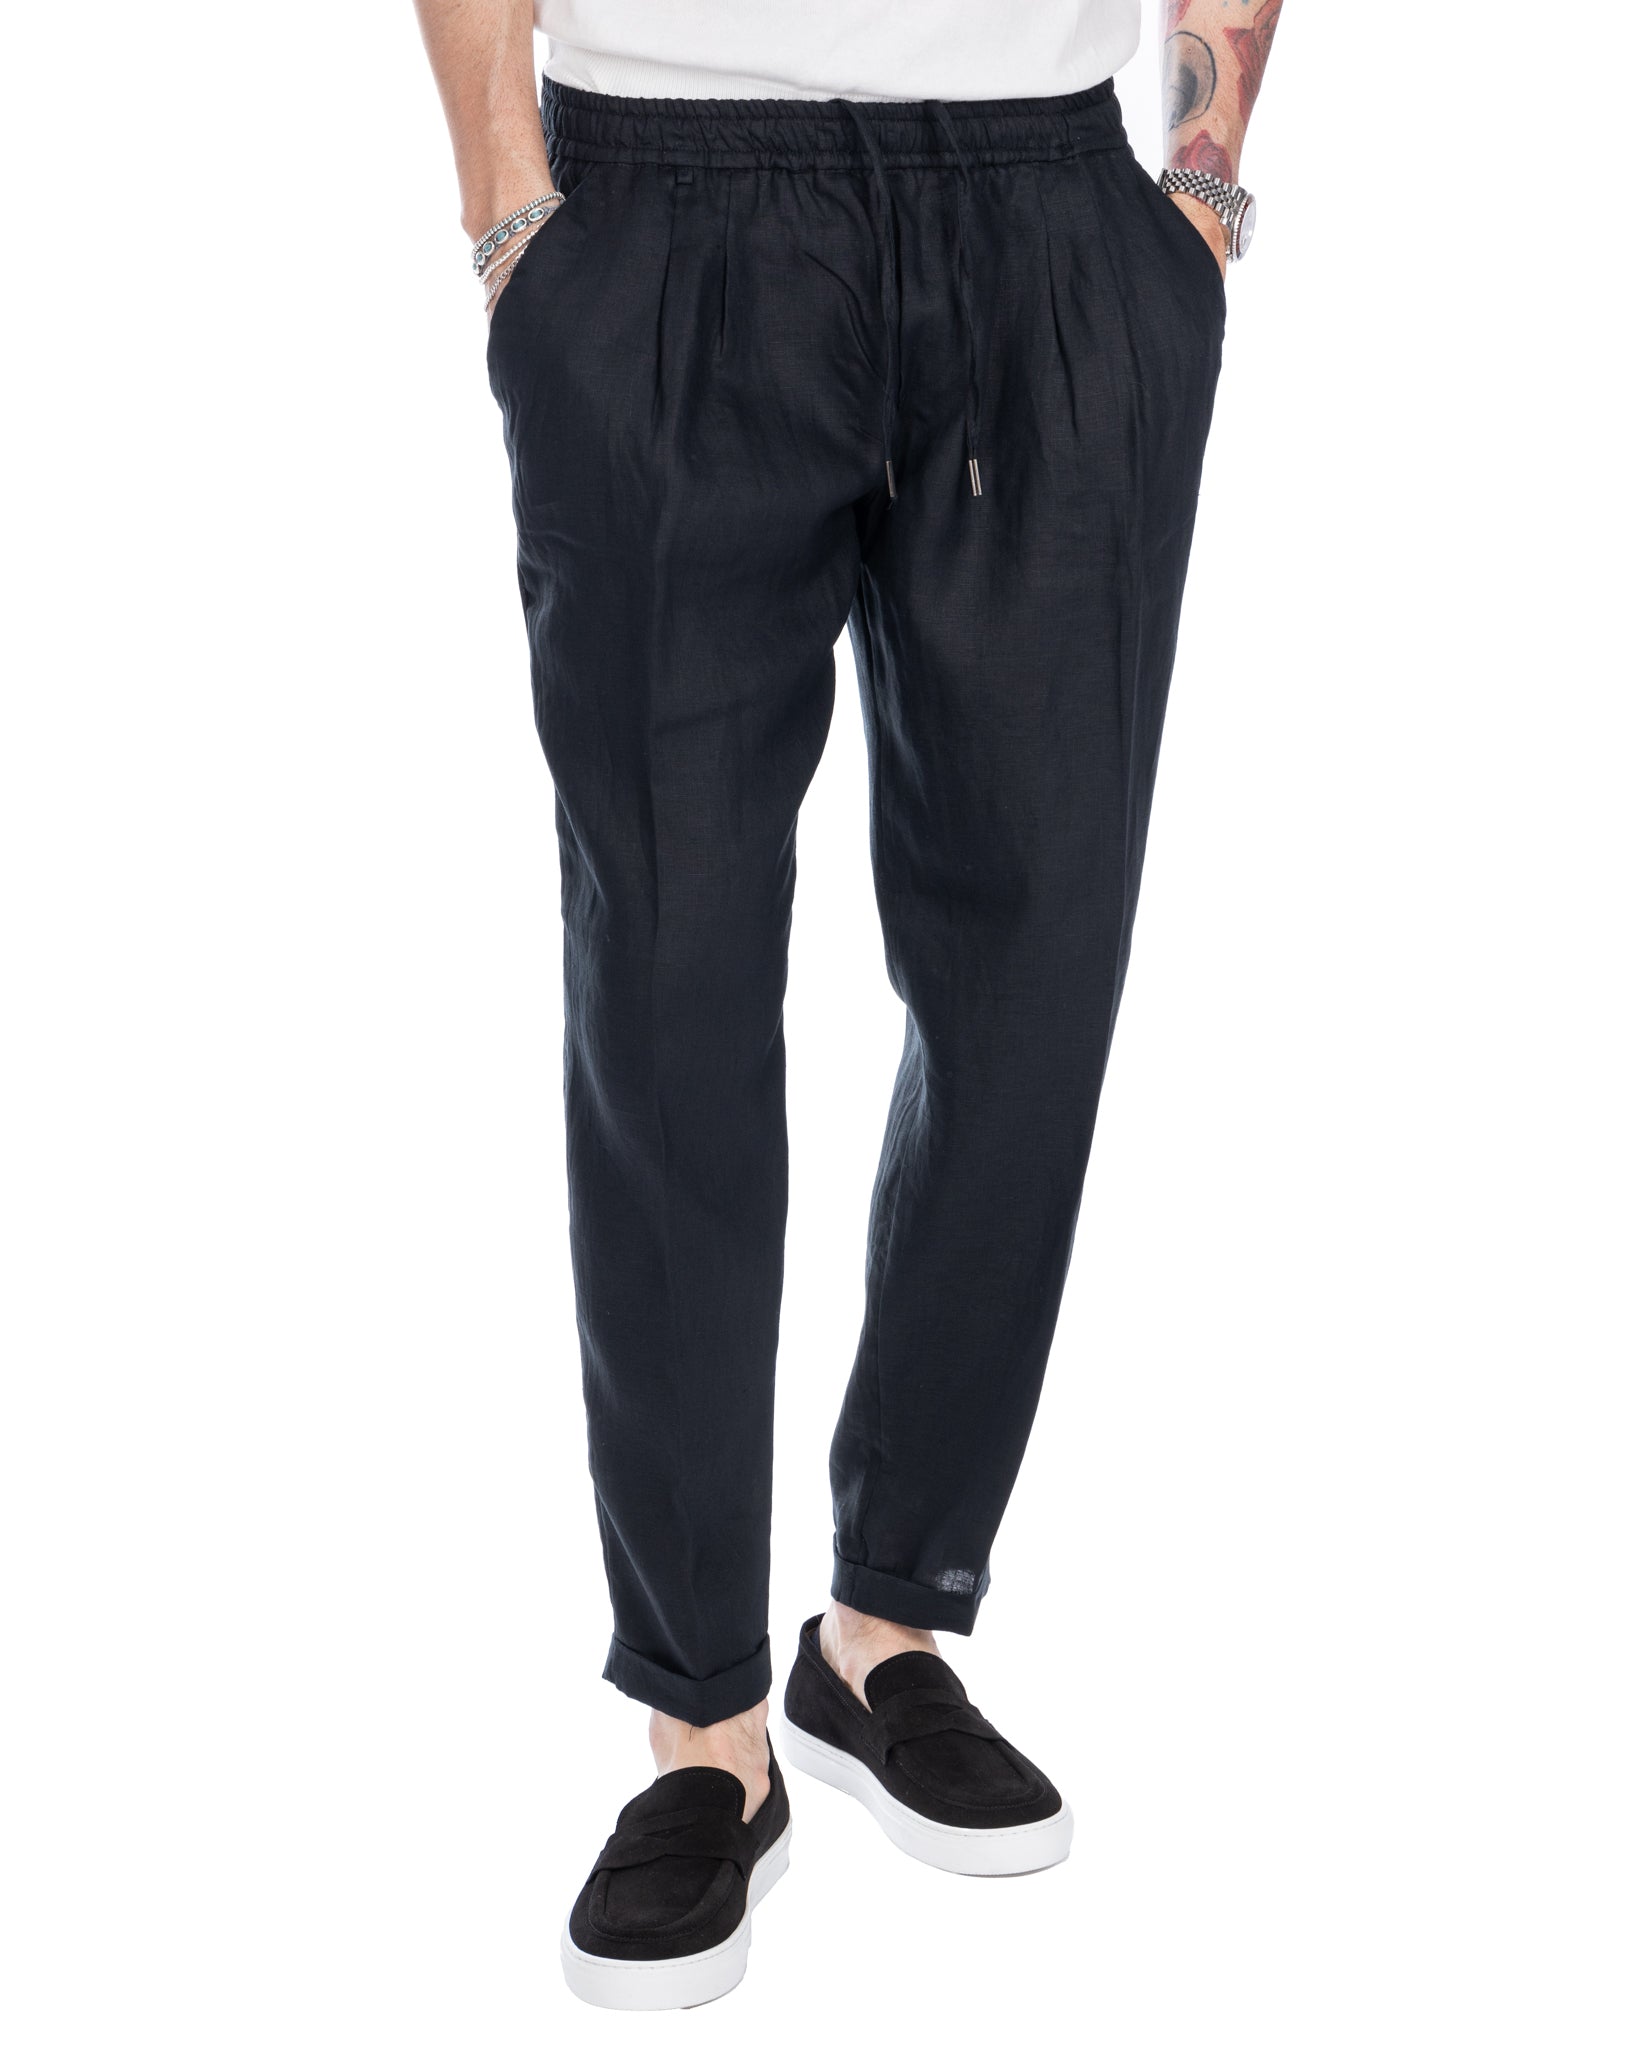 Colin - trousers in pure black linen